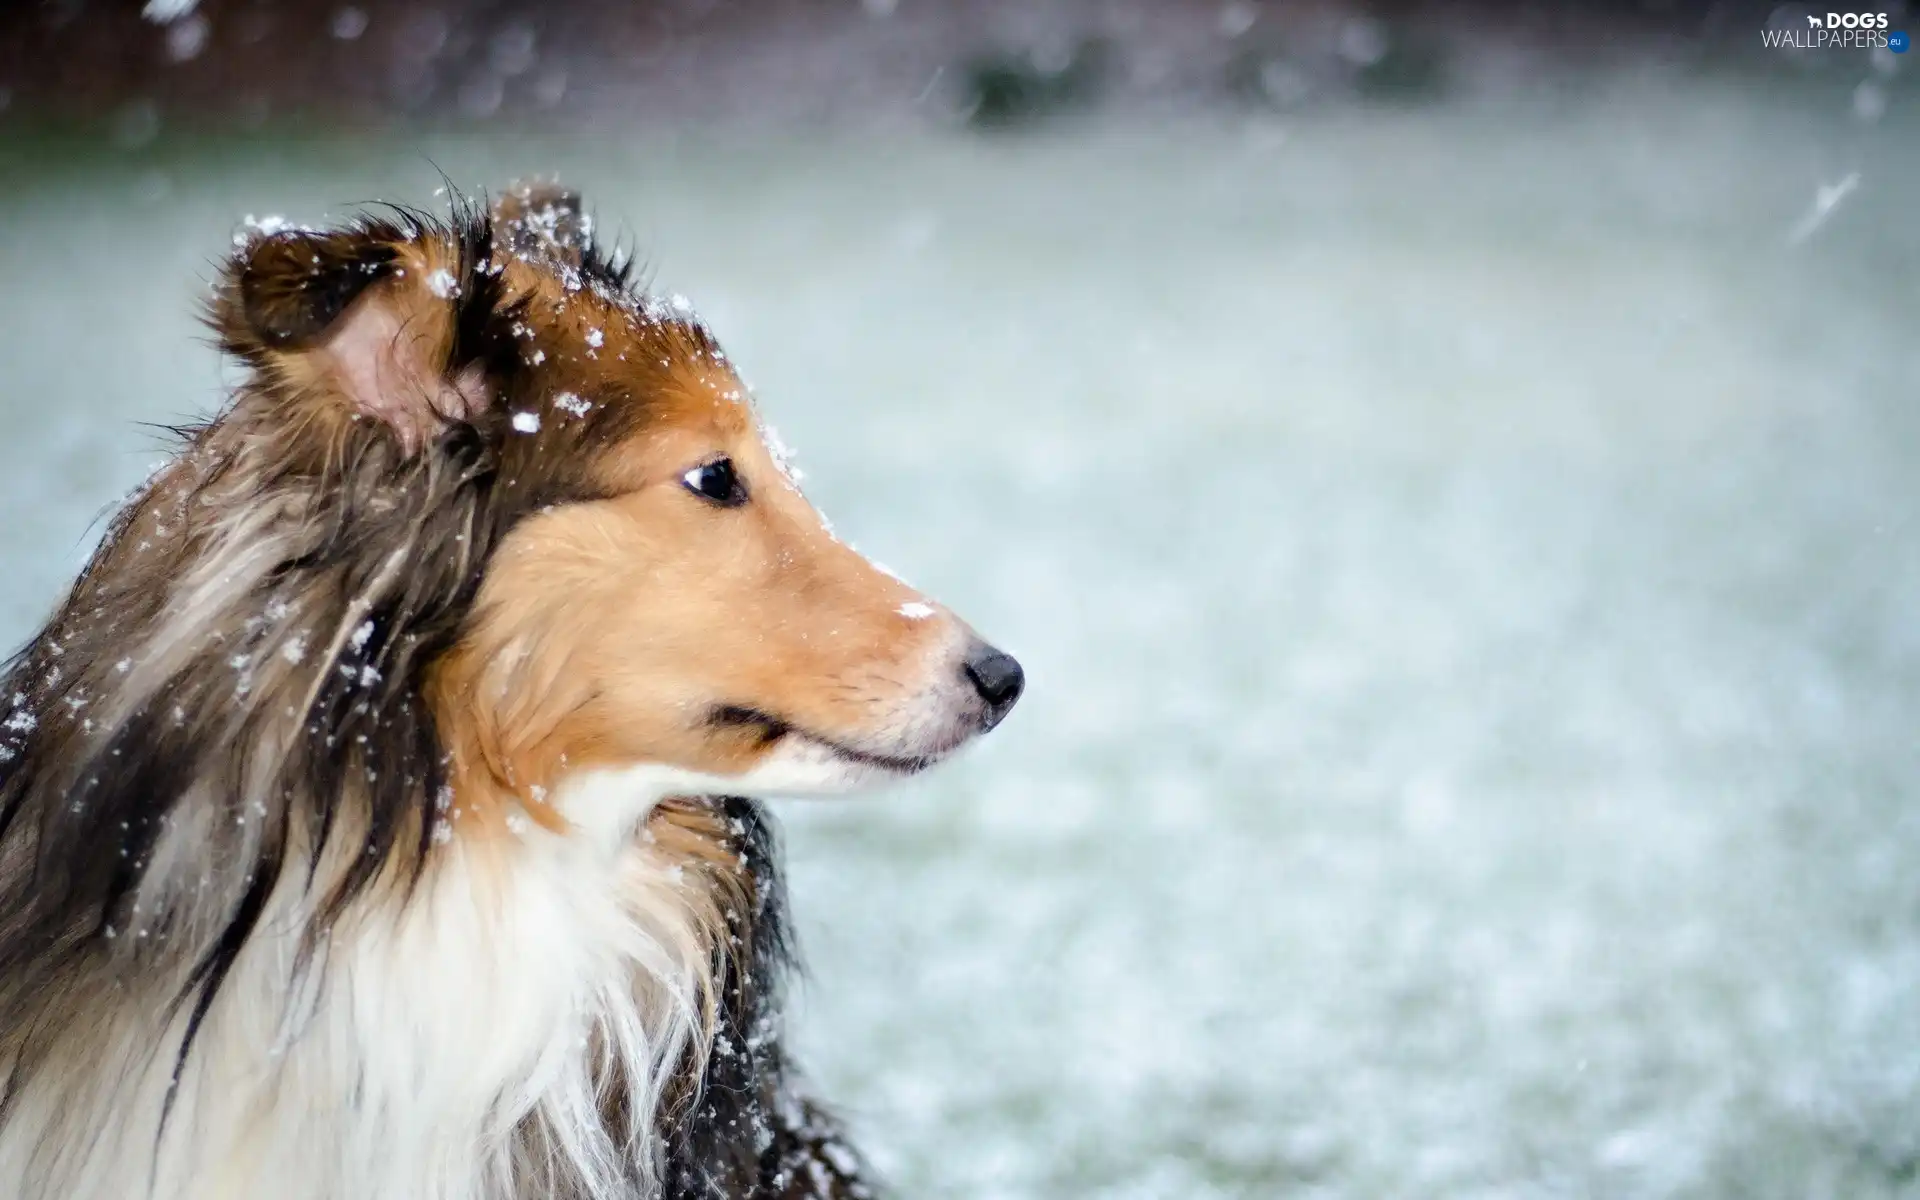 Fur, snow, dog